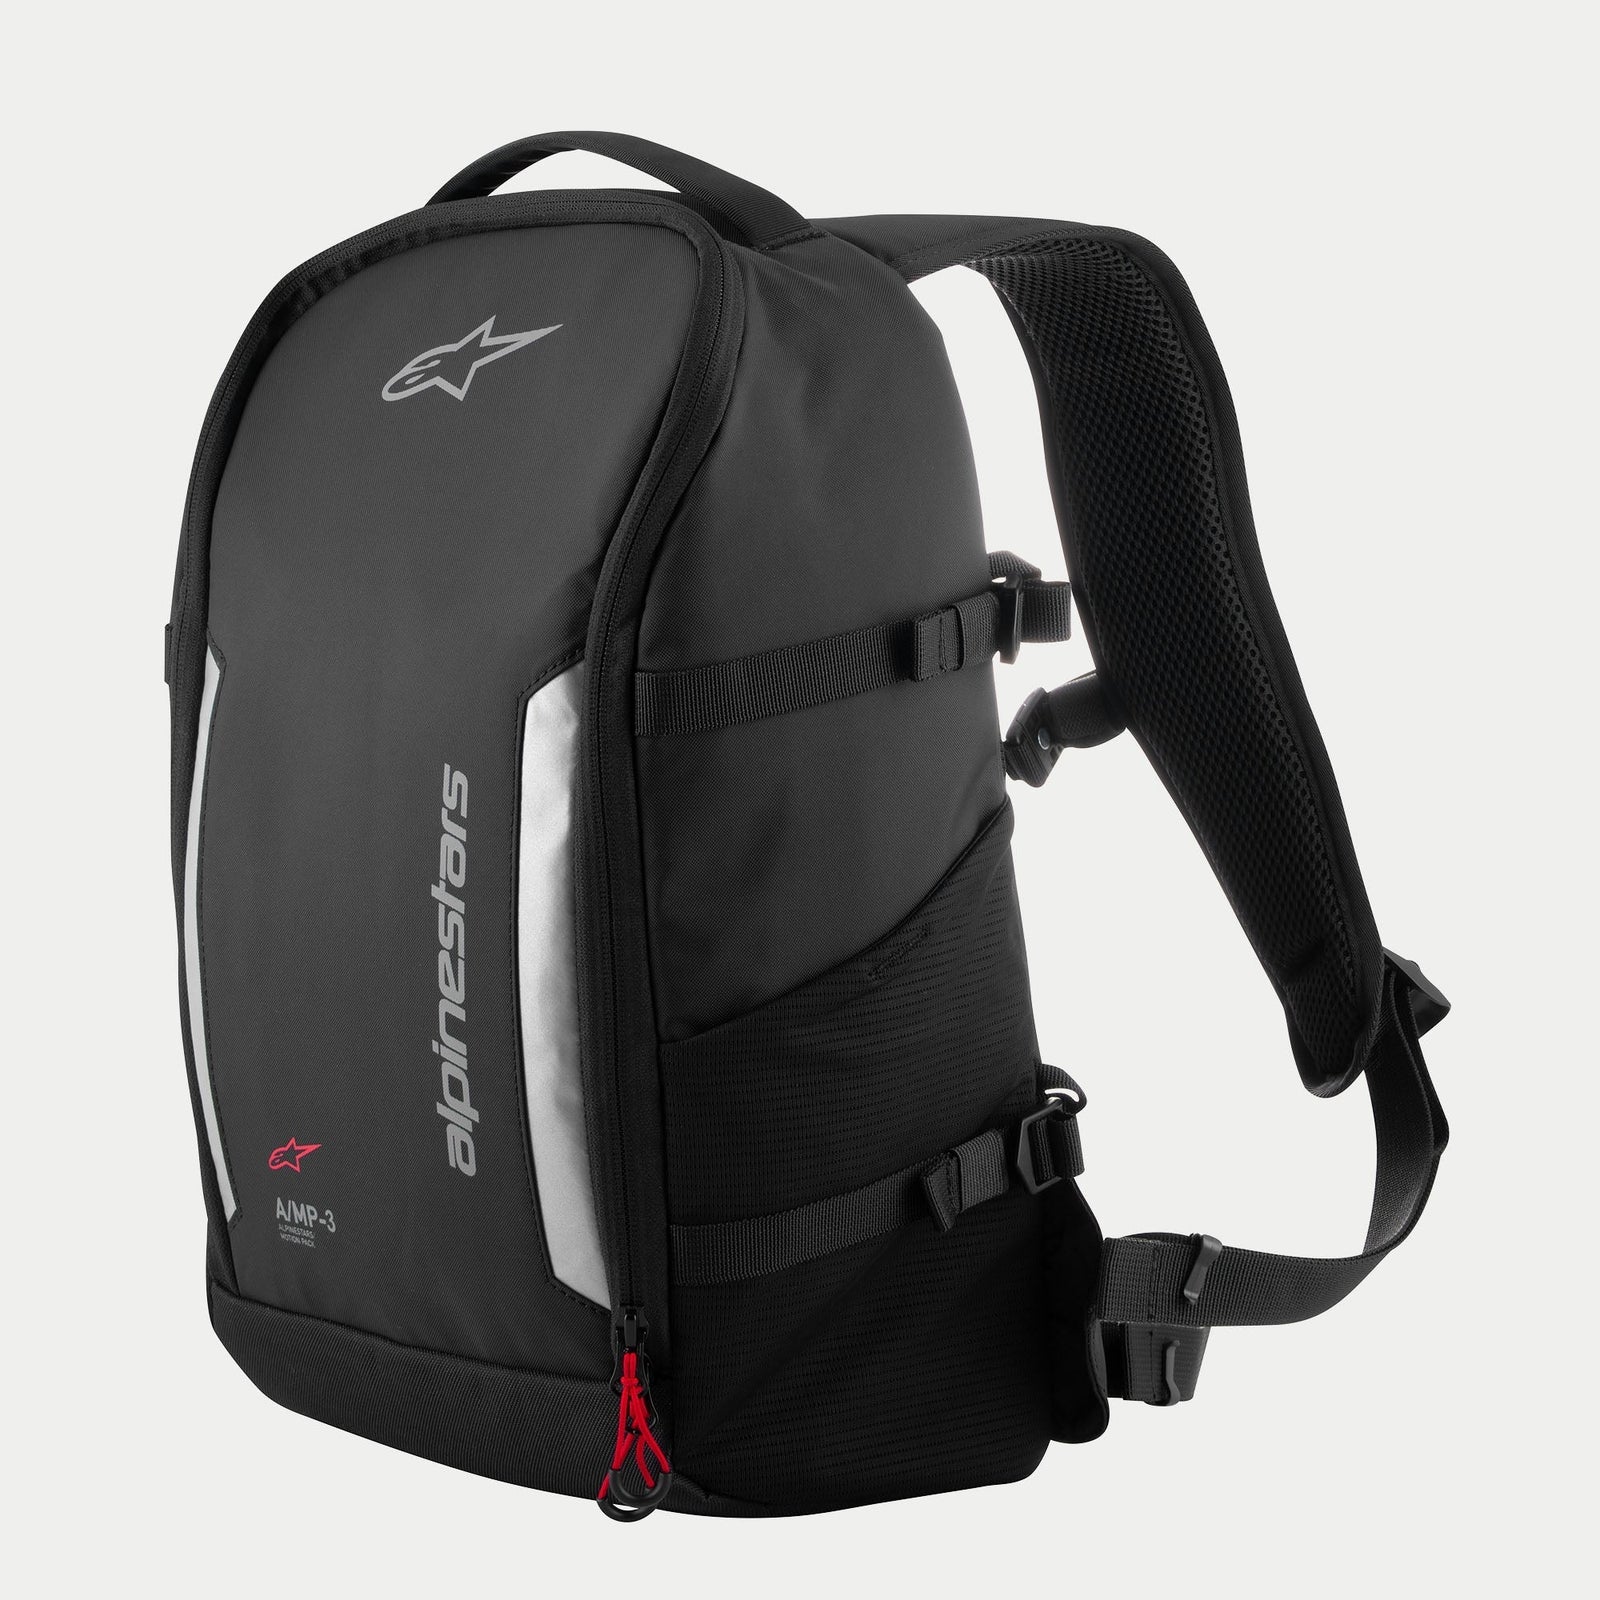 AMP3 Backpack